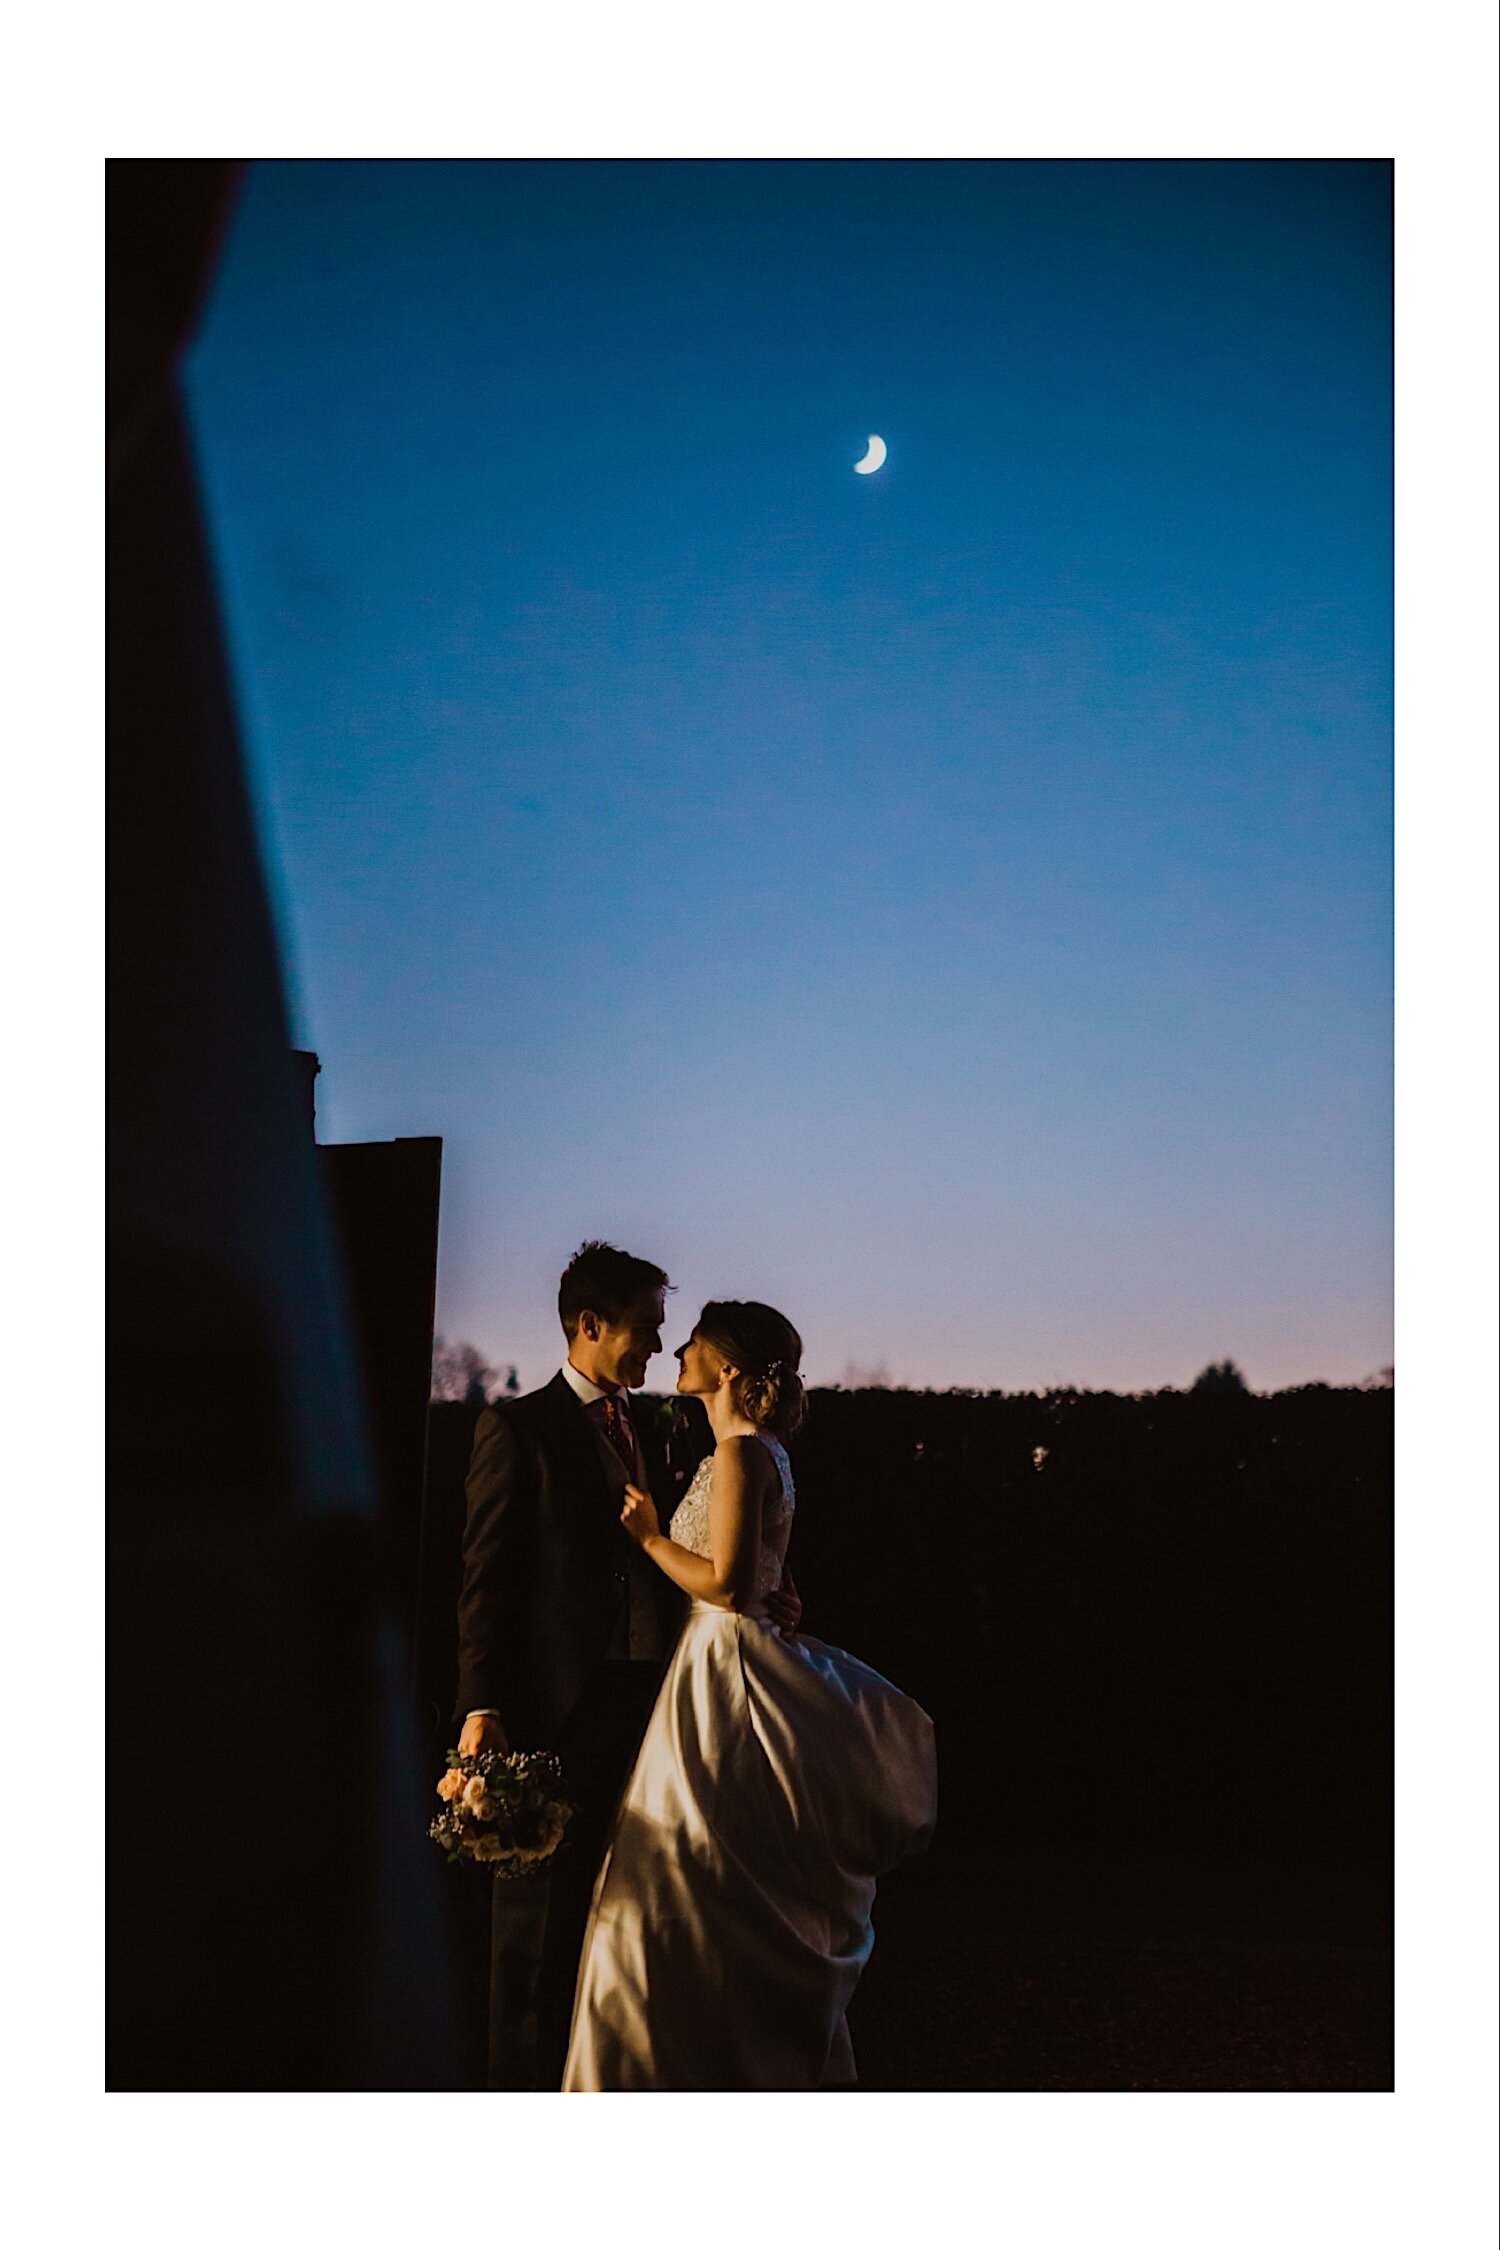 082_TWS-898_bride_couple_photography_henley_oxfordshire_millitary_crooked_moon_portraits_wedding_groom_winter_billet.jpg